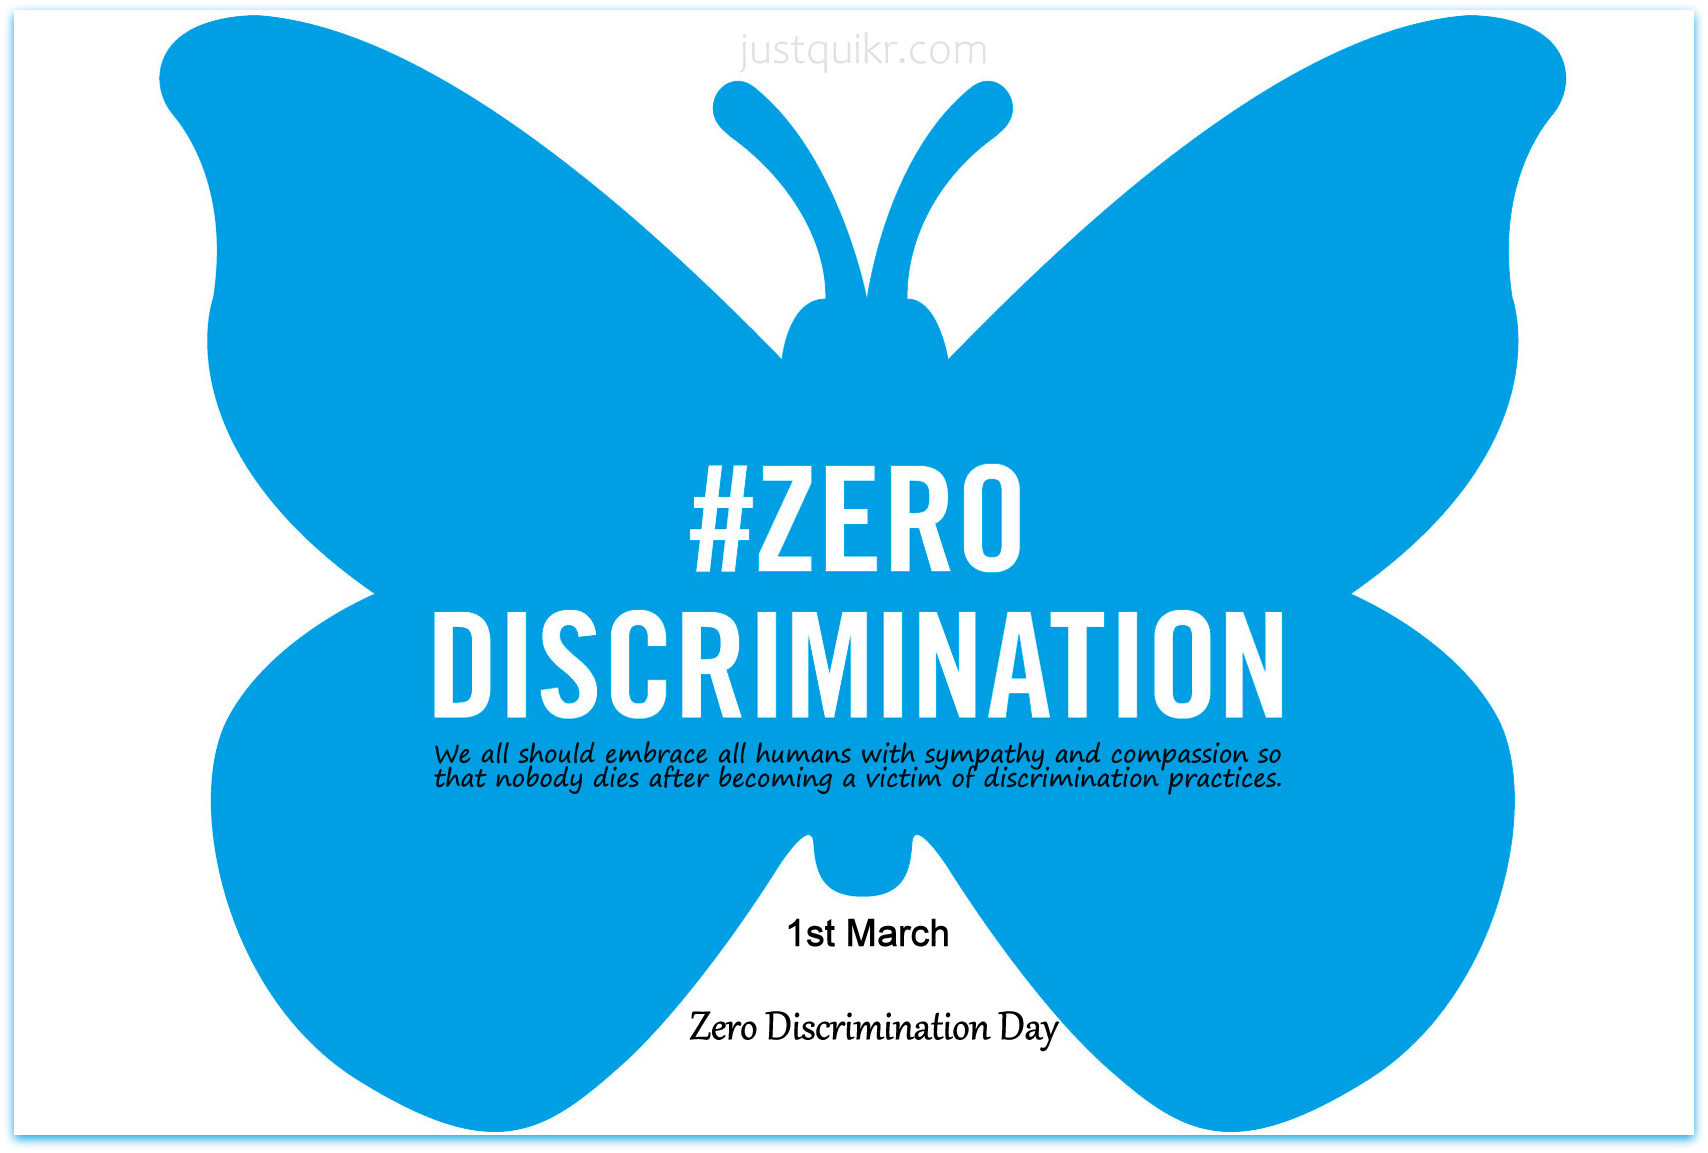 Zero Discrimination Day